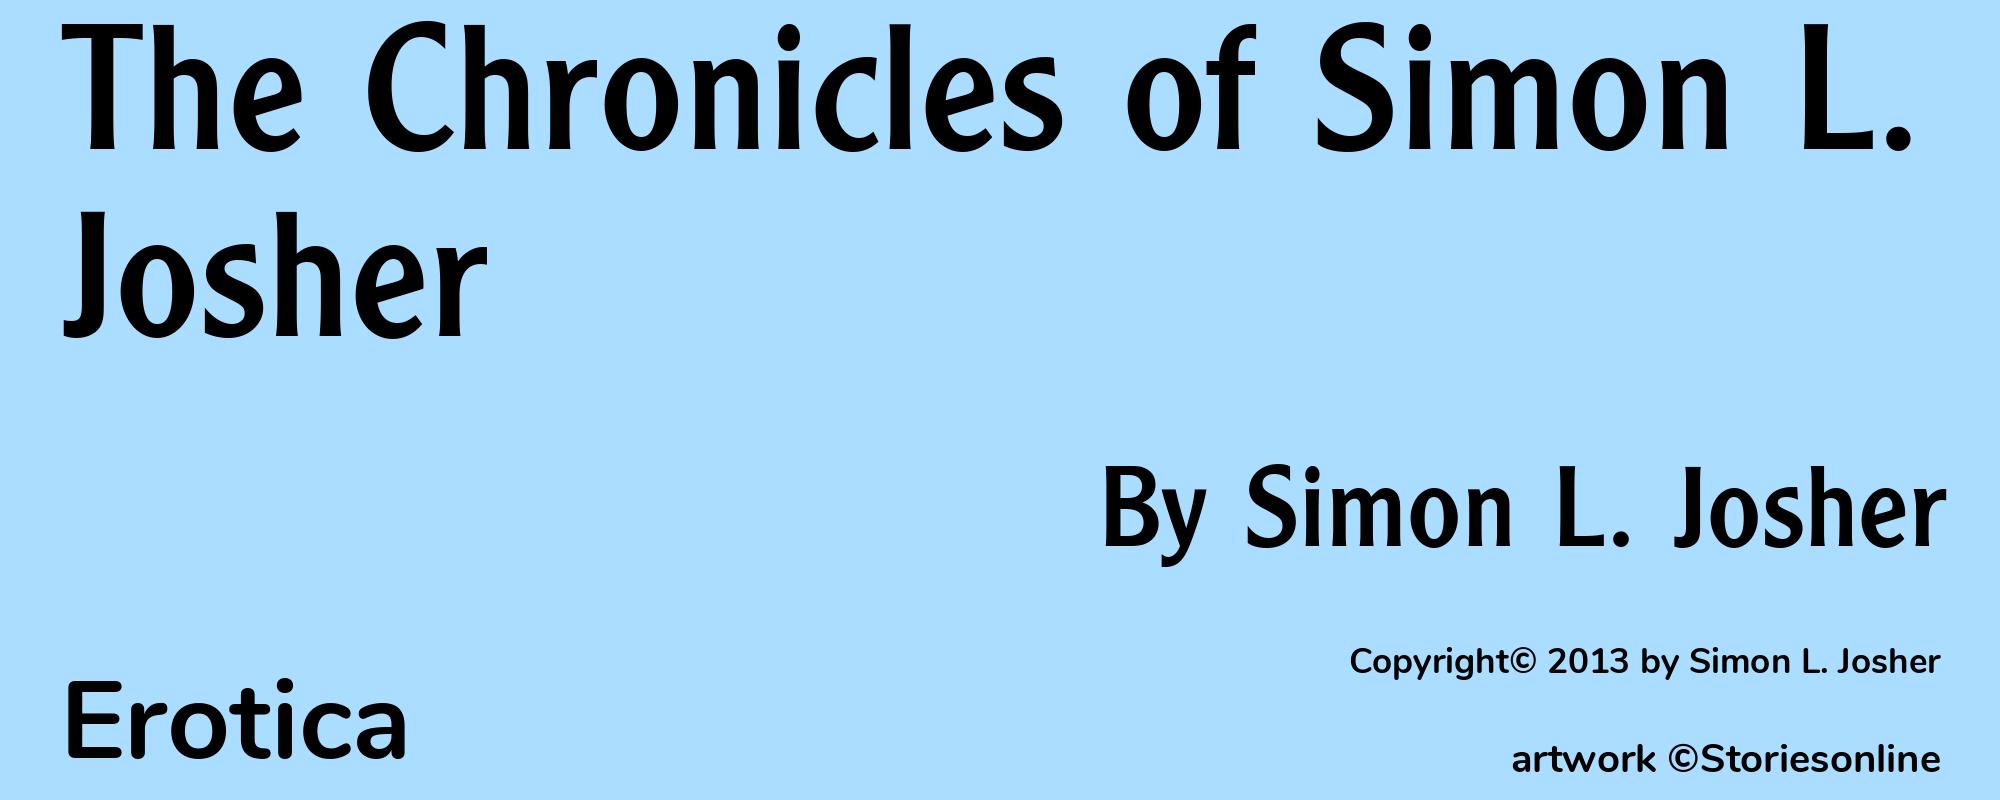 The Chronicles of Simon L. Josher - Cover